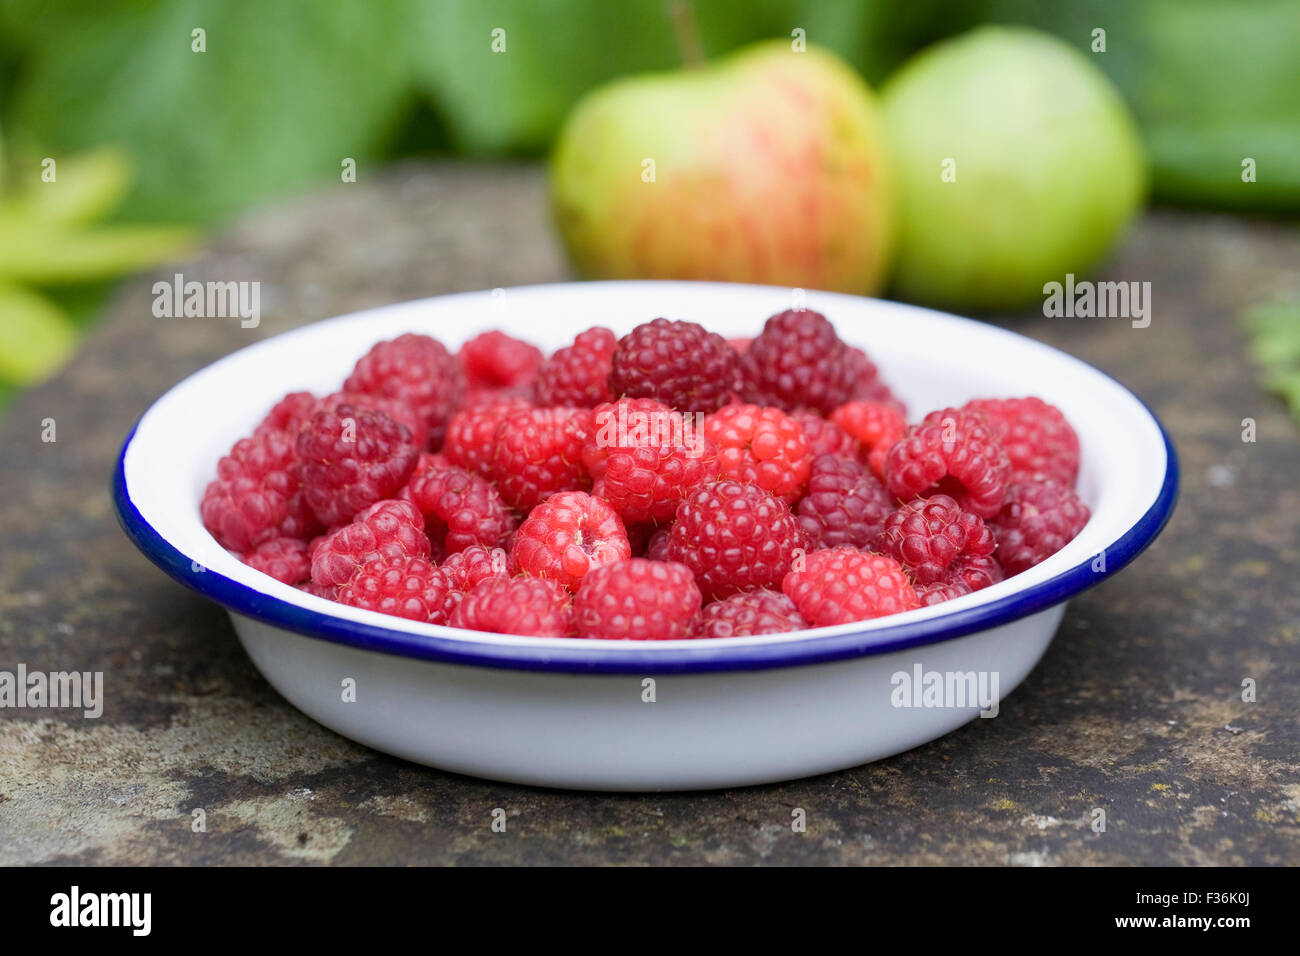 Rubus idaeus 'Autumn Bliss'. Freshly picked red berries in an enamel bowl. Stock Photo